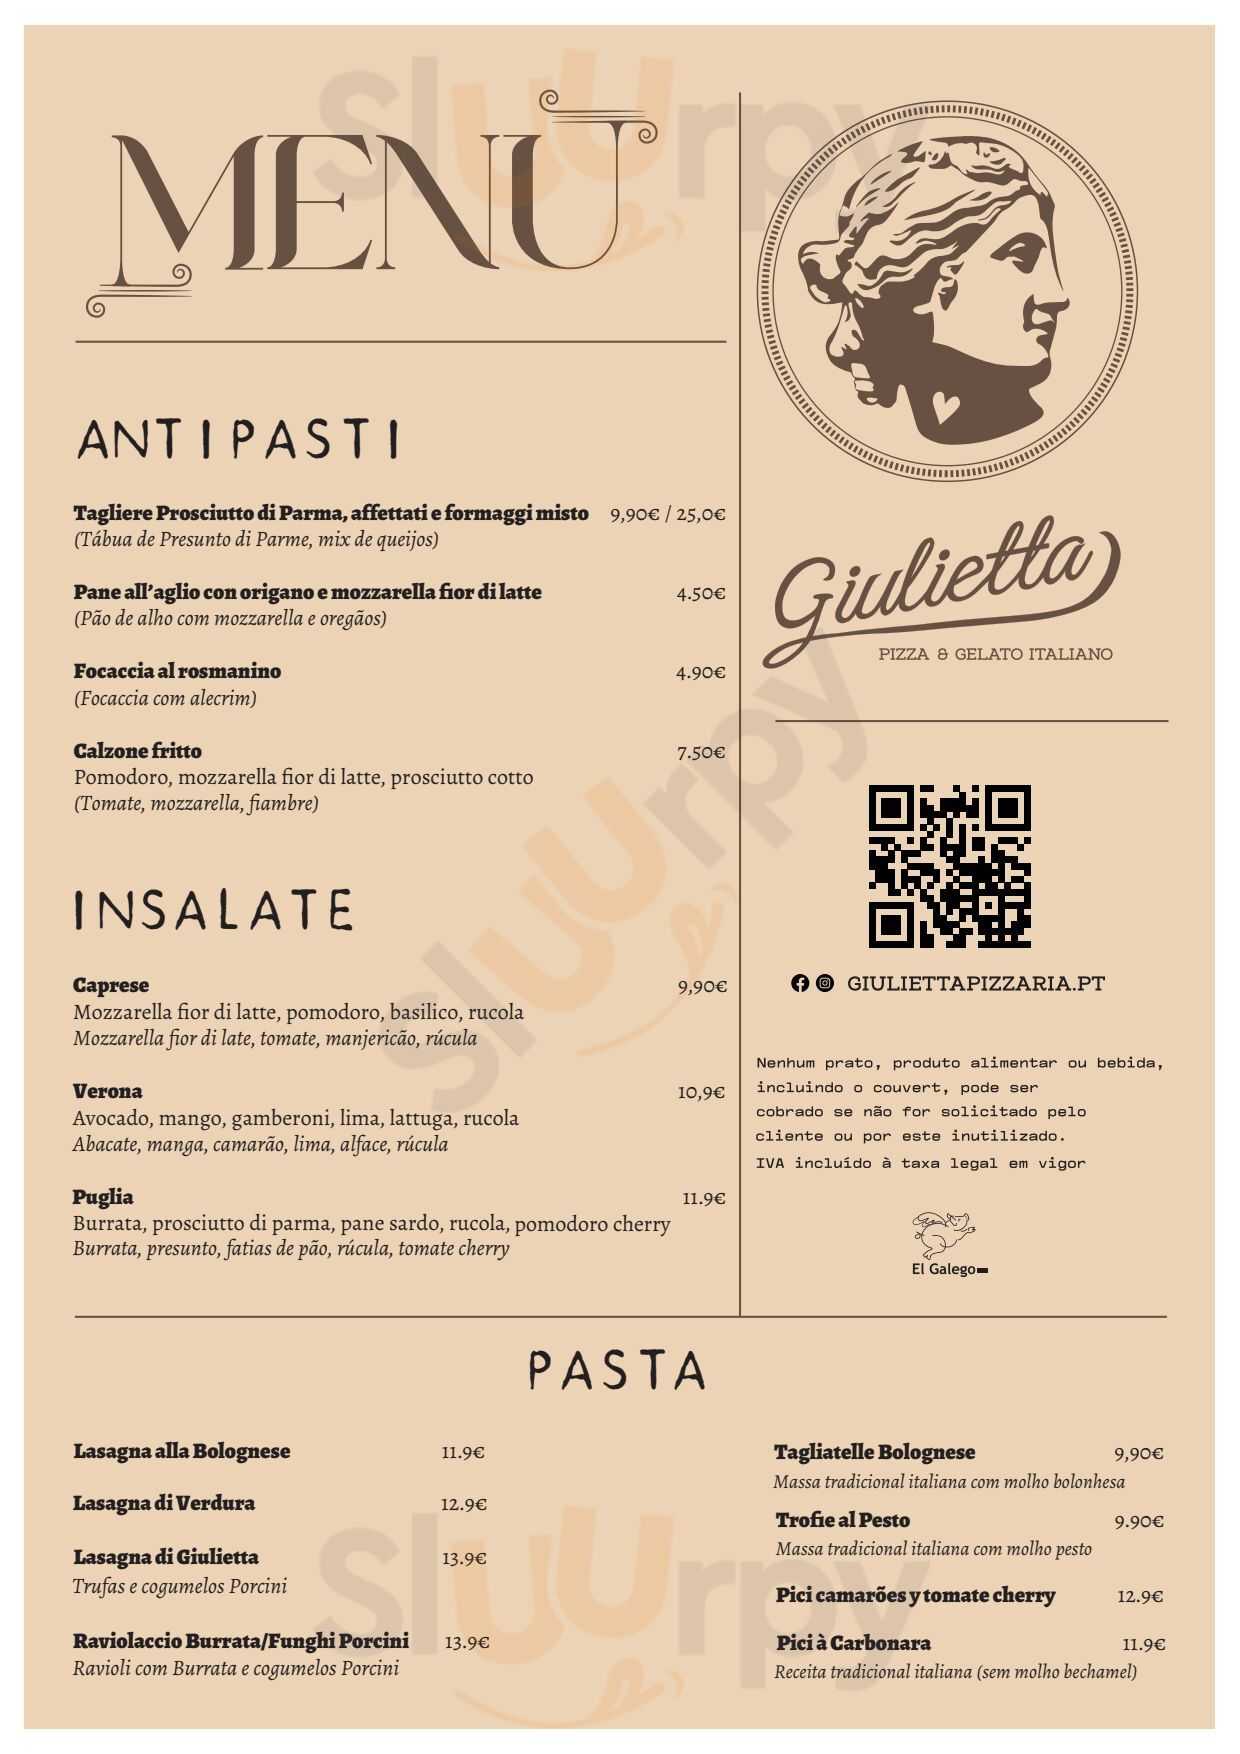 Giulietta Pizza & Gelato Santarém Menu - 1